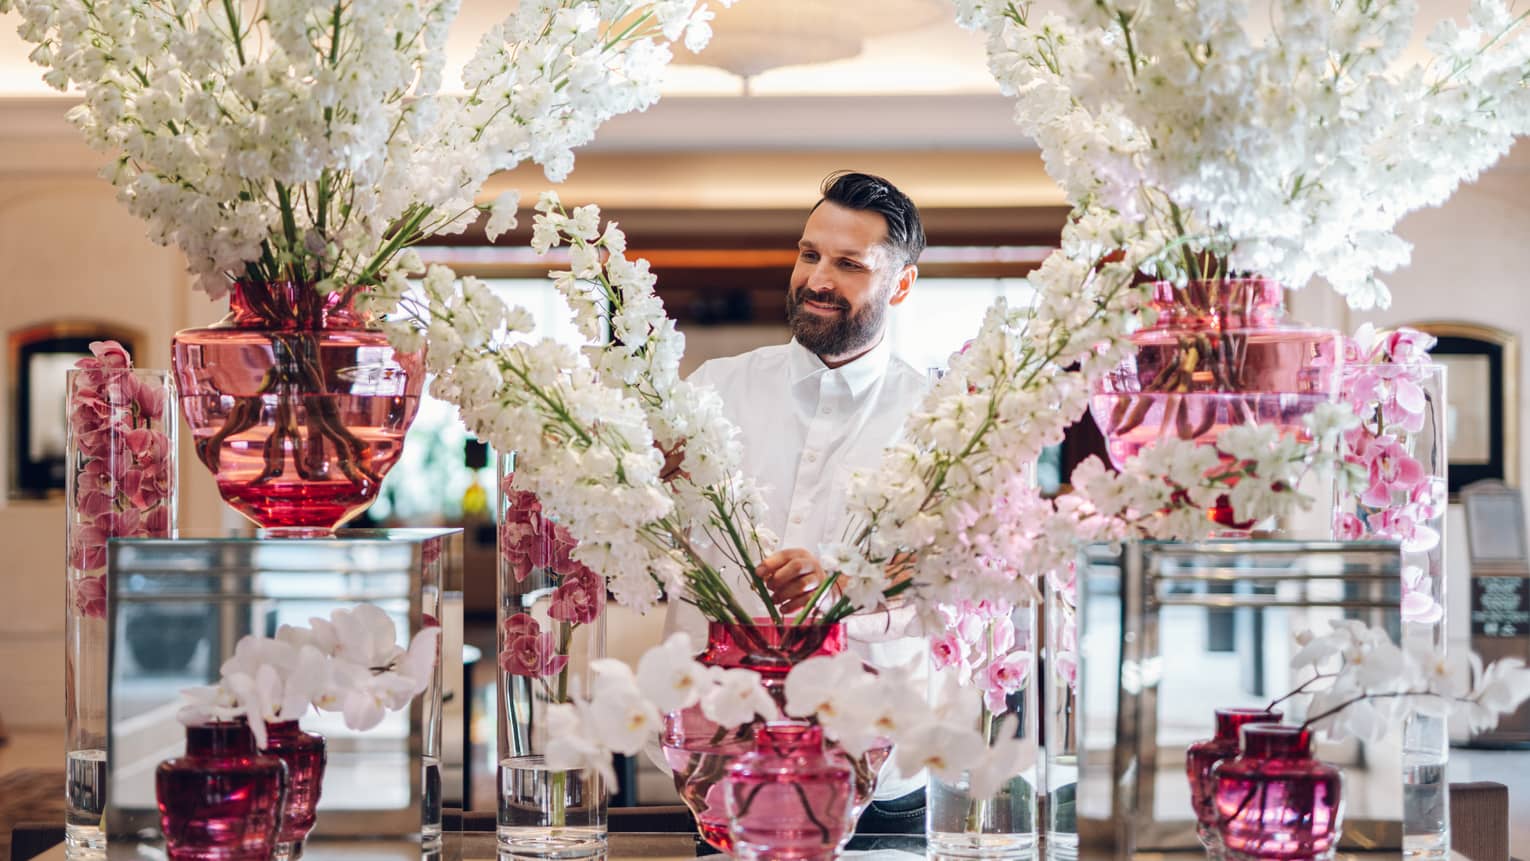 Floral designer standing behind large display of white flower sprays in assorted pink vases